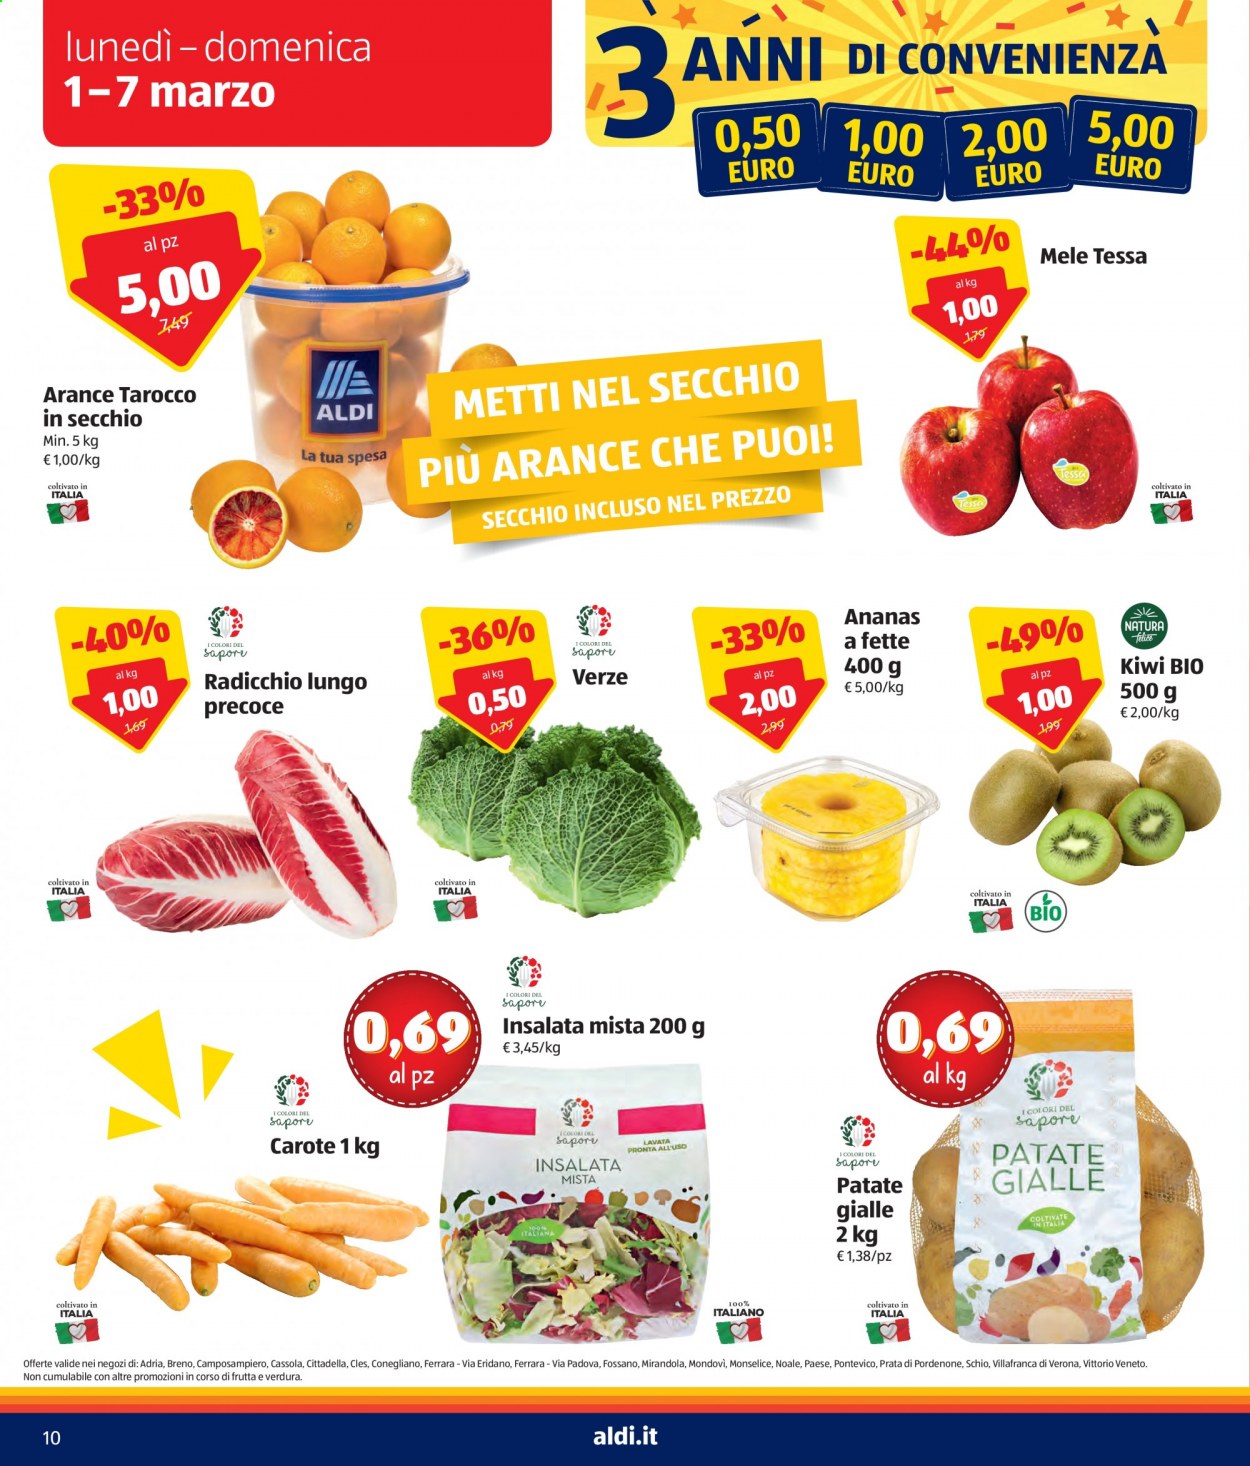 thumbnail - Volantino Aldi - 1/3/2021 - 7/3/2021 - Prodotti in offerta - insalata mista, patate, carote, radicchio, patate gialle, mele, ananas, arance, kiwi, secchio. Pagina 10.